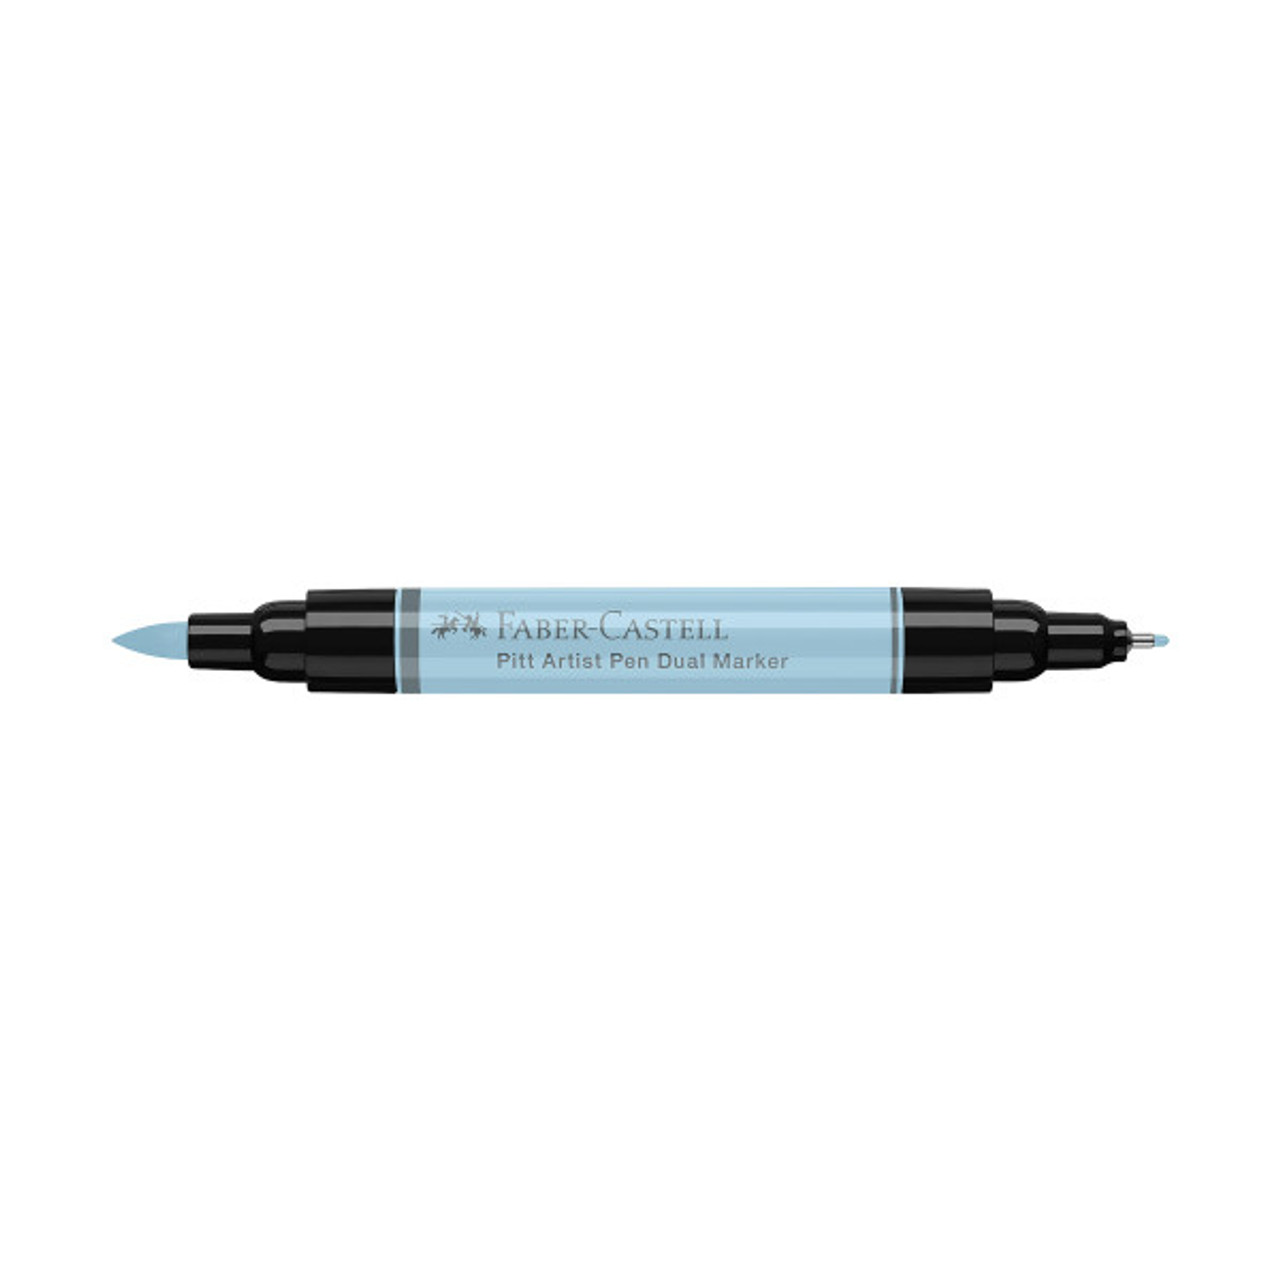 148 Ice Blue - Buy 4, Get 1 Free - Pitt Artist Pen Dual Marker - Faber Castell